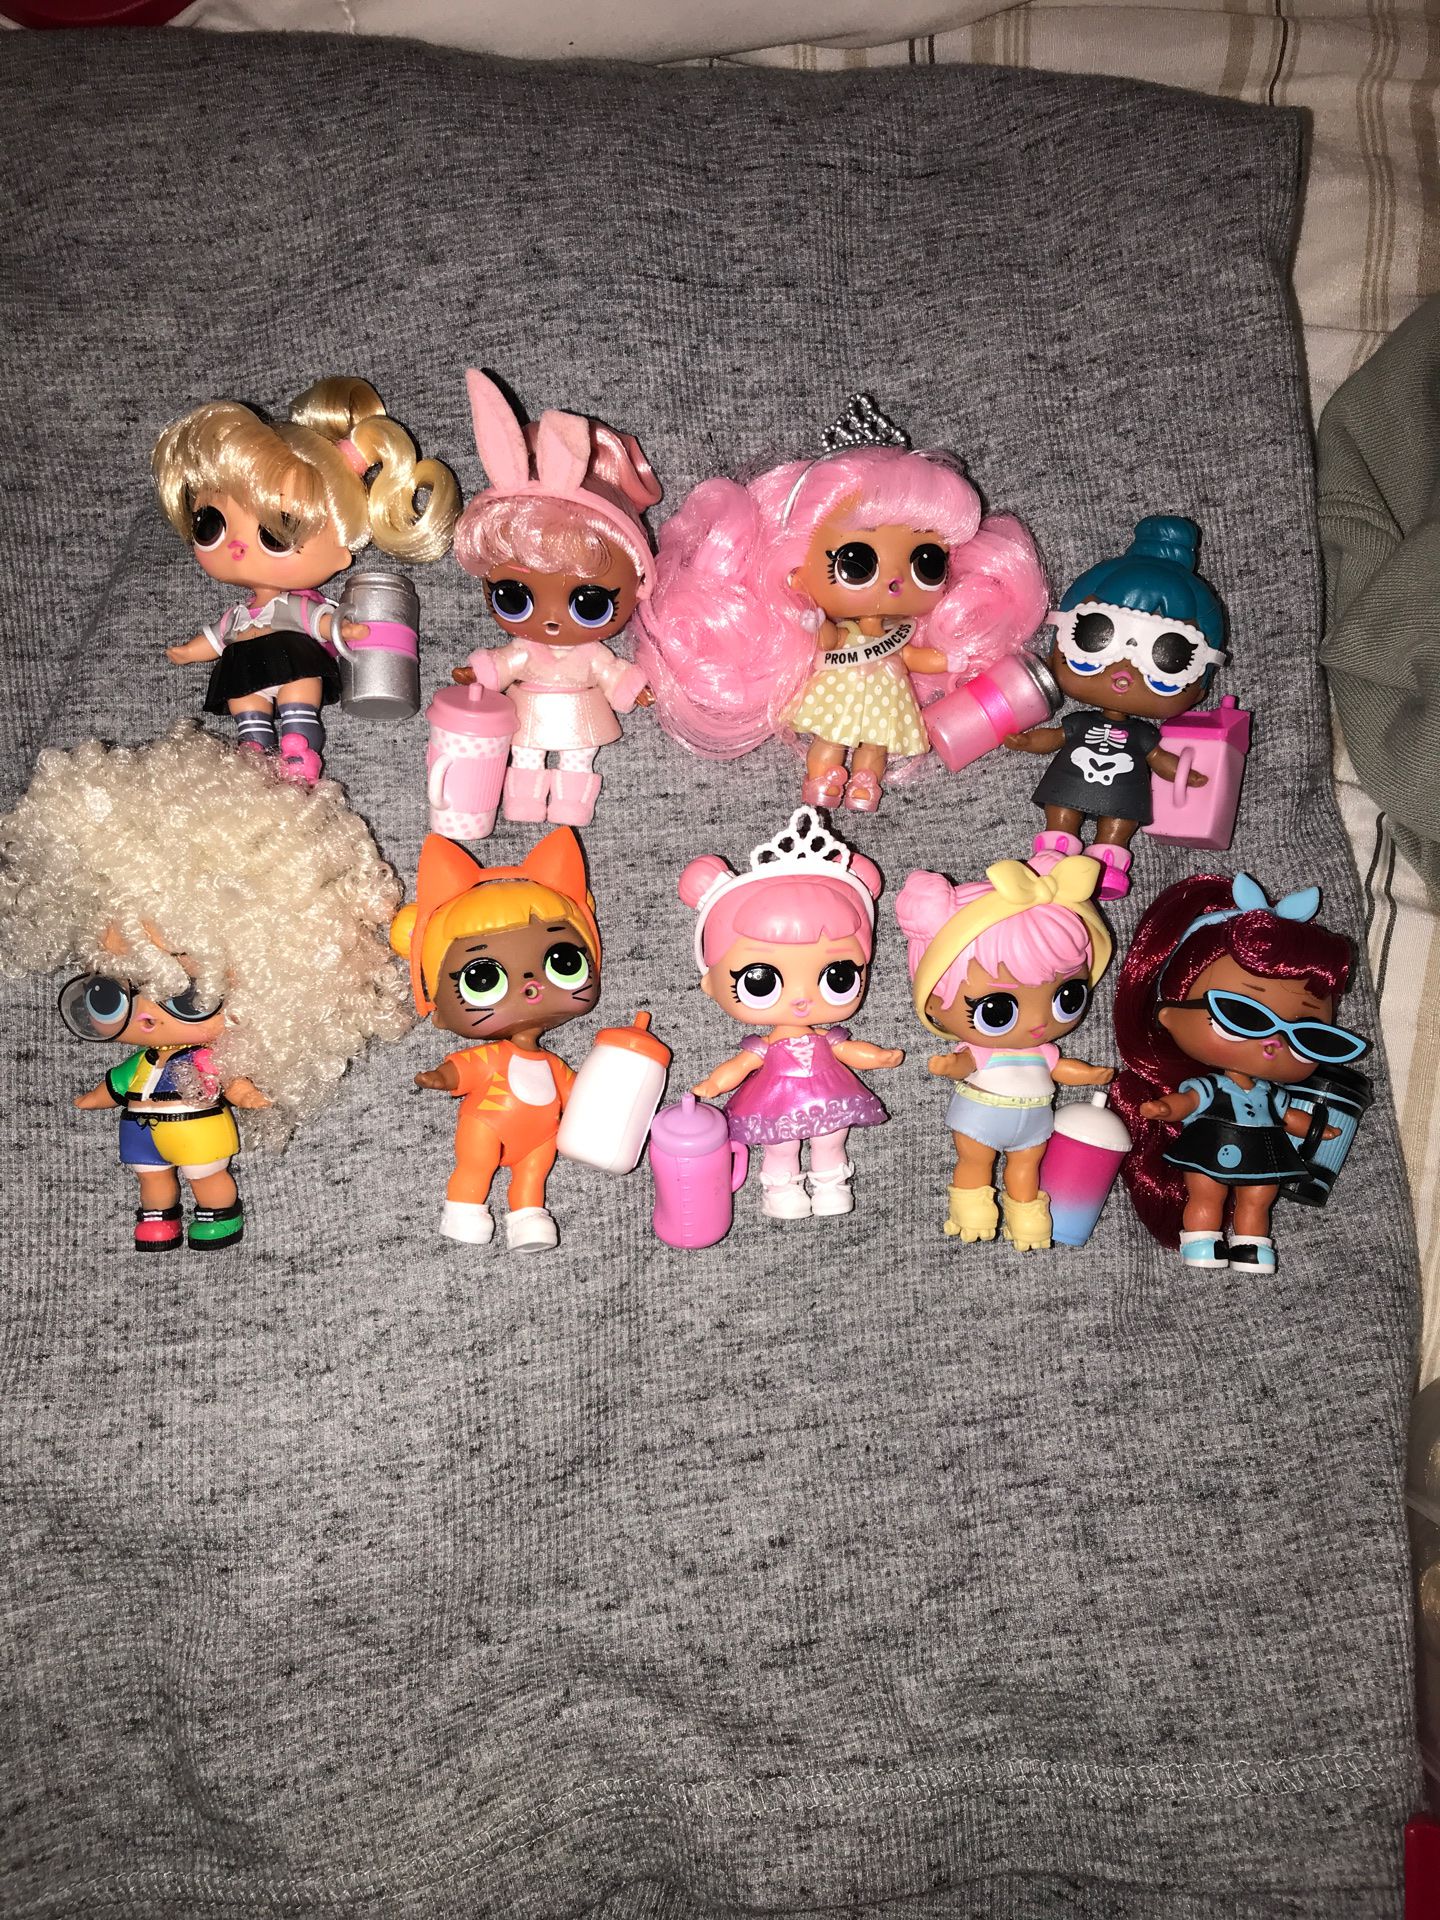 Lol surprise dolls - 9 Random dolls